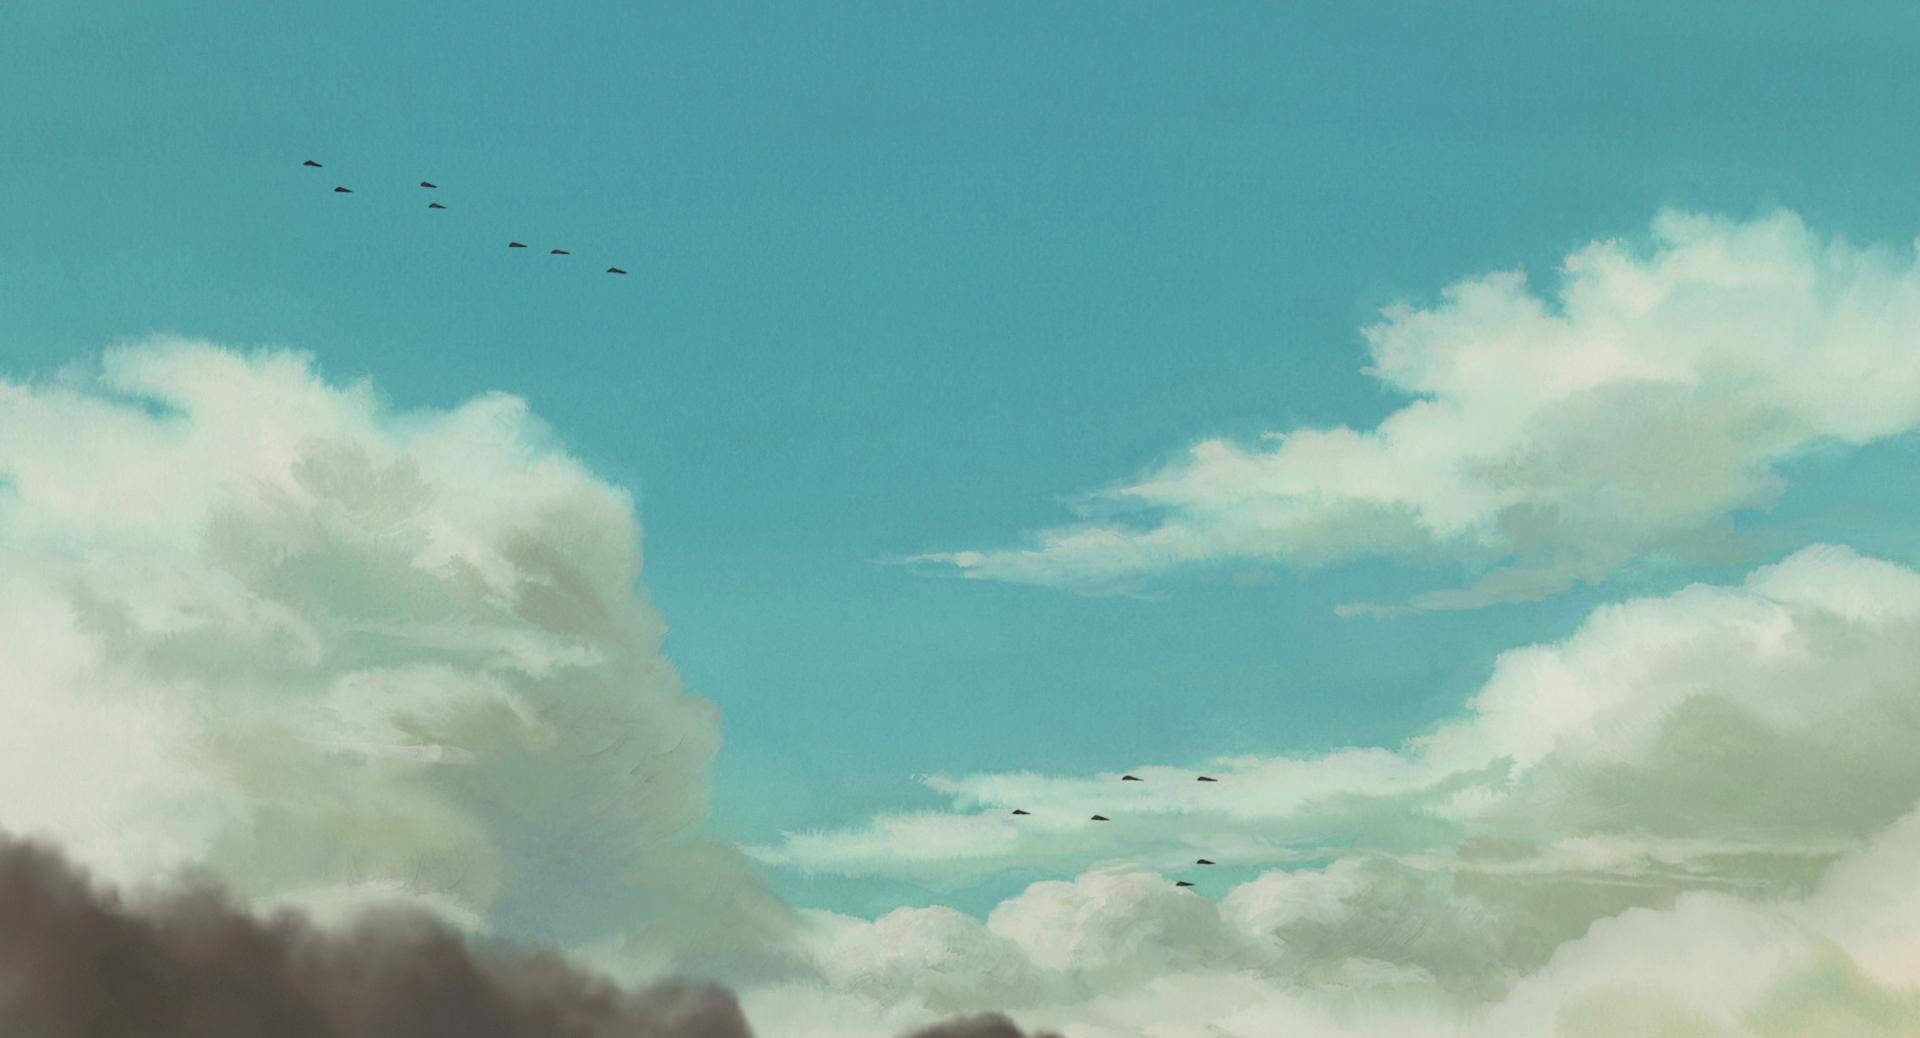 Studio Ghibli Scenery Blue Sky With Planes Wallpaper